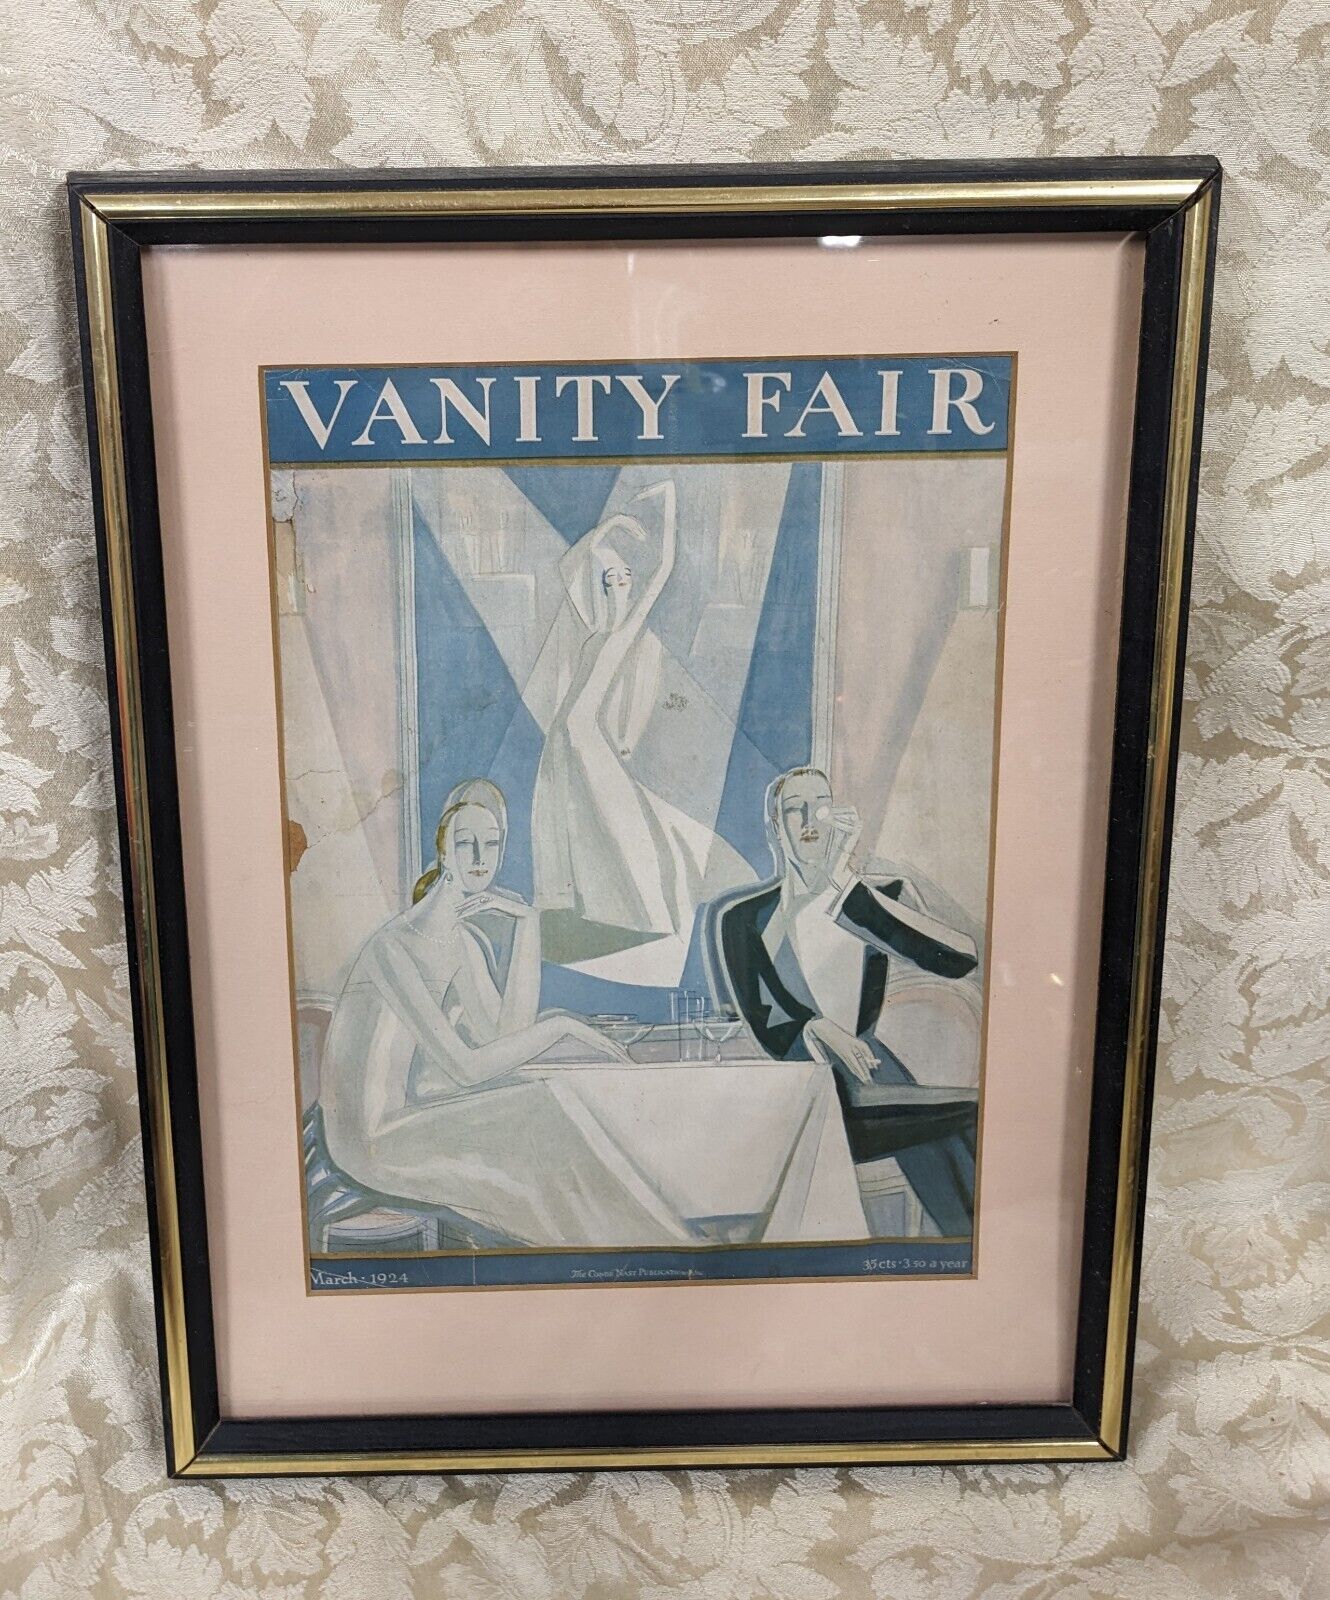 Vanity fair March 1924 Framed Magazine cover